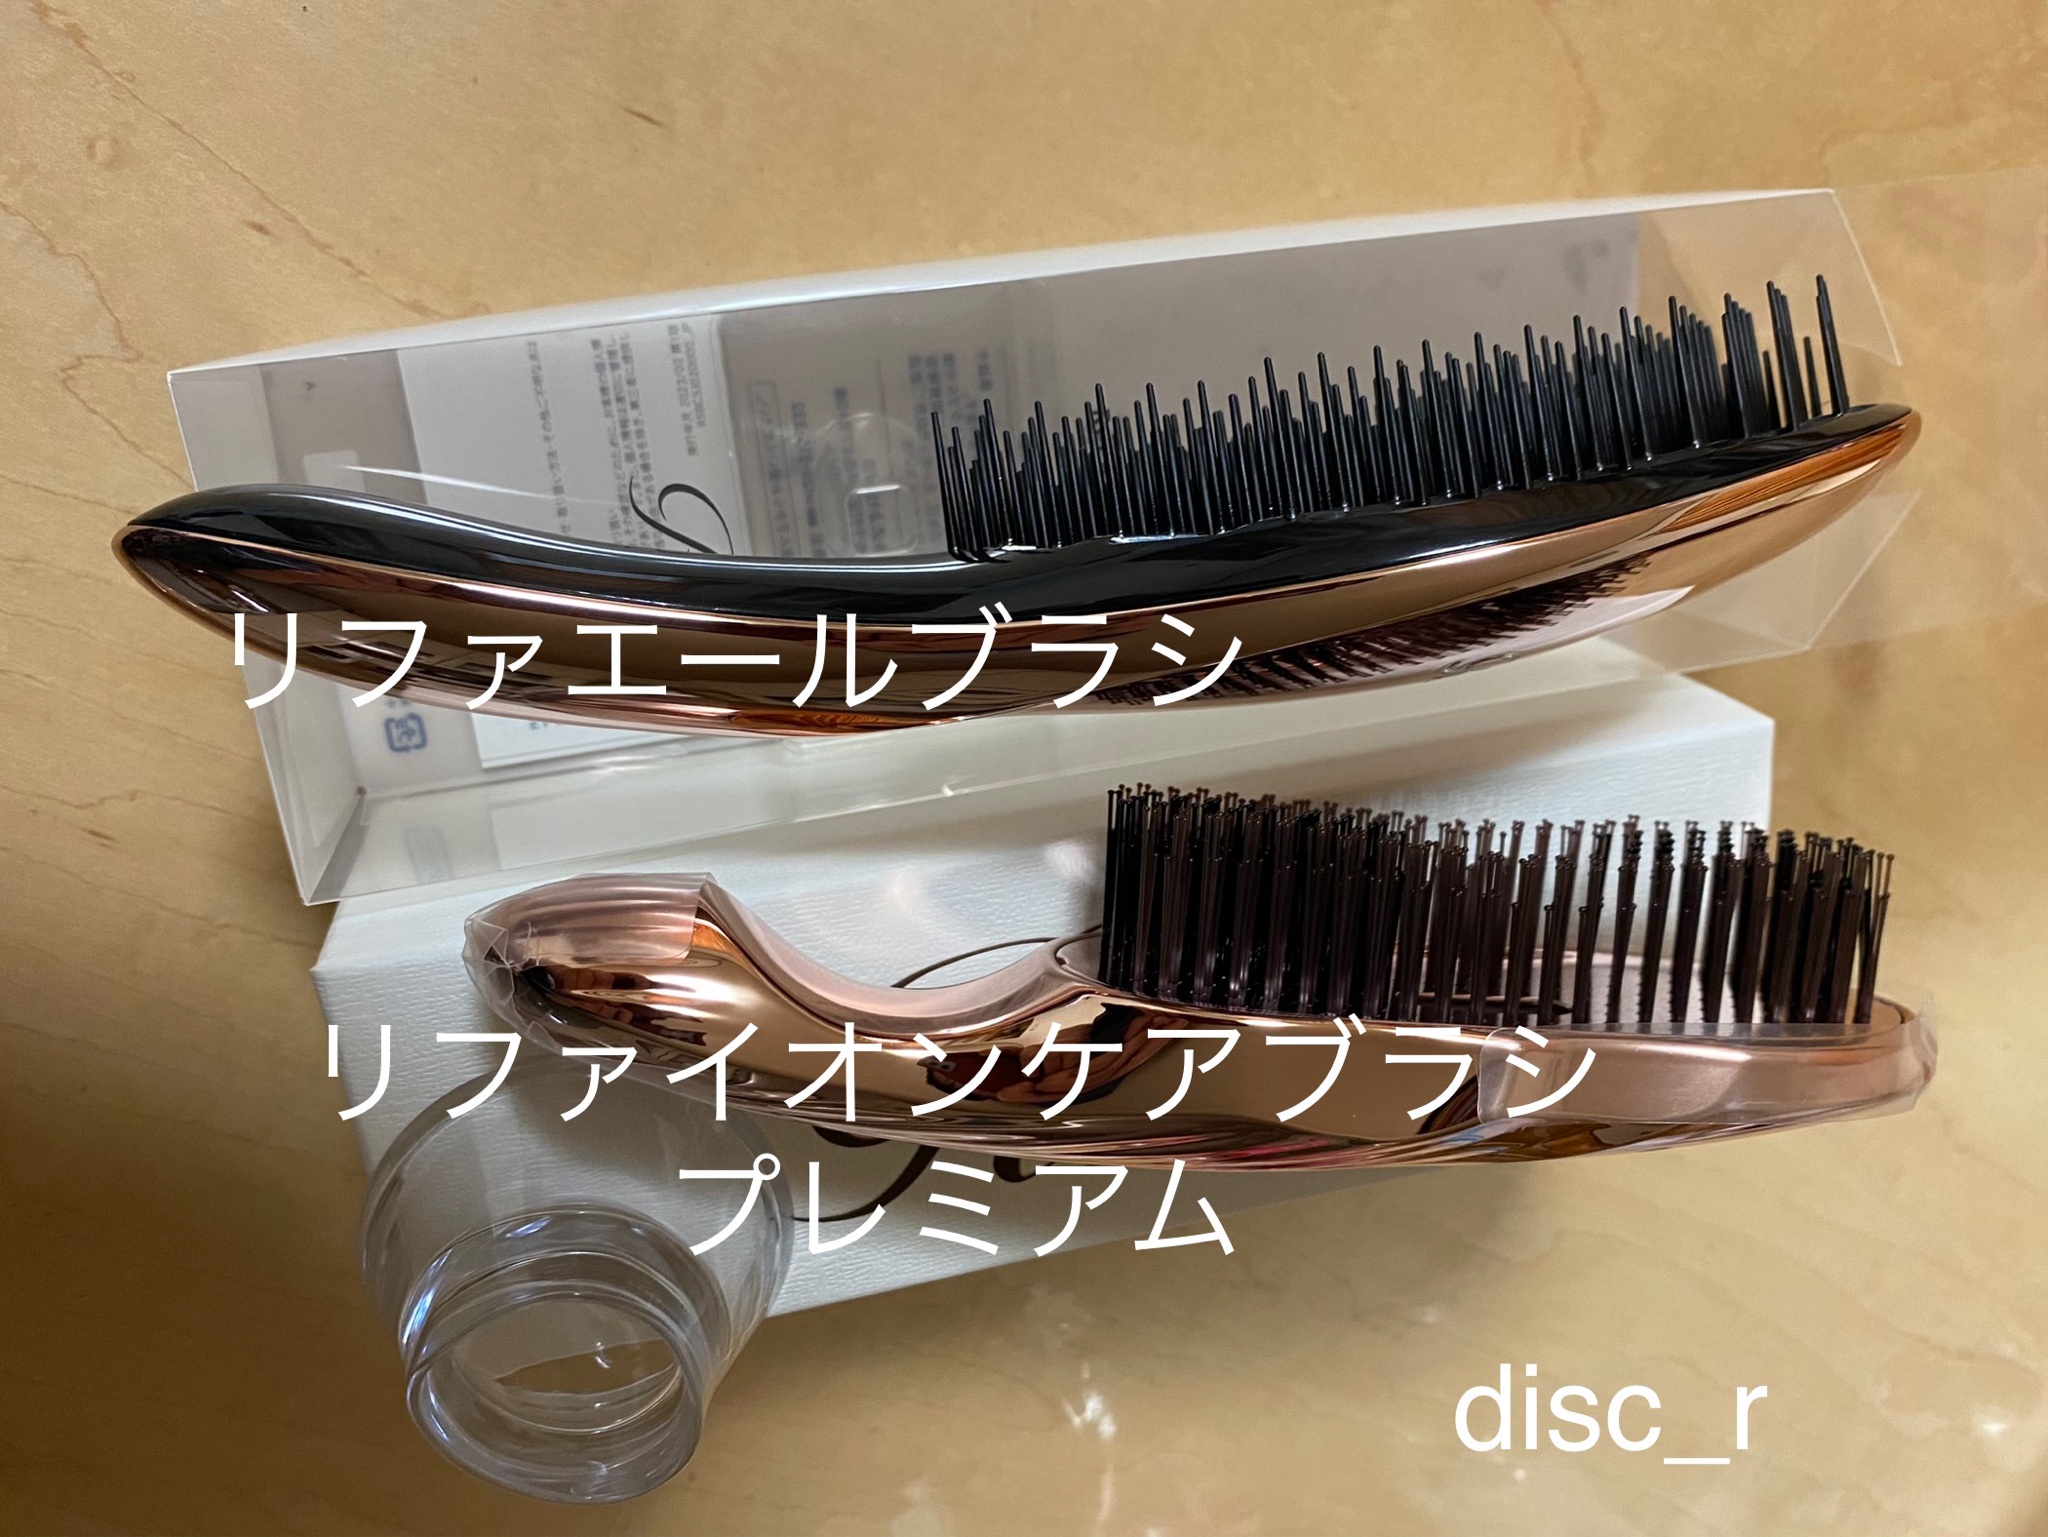 ReFa / ReFa AILE BRUSHの口コミ（by disc_rさん）｜美容・化粧品情報